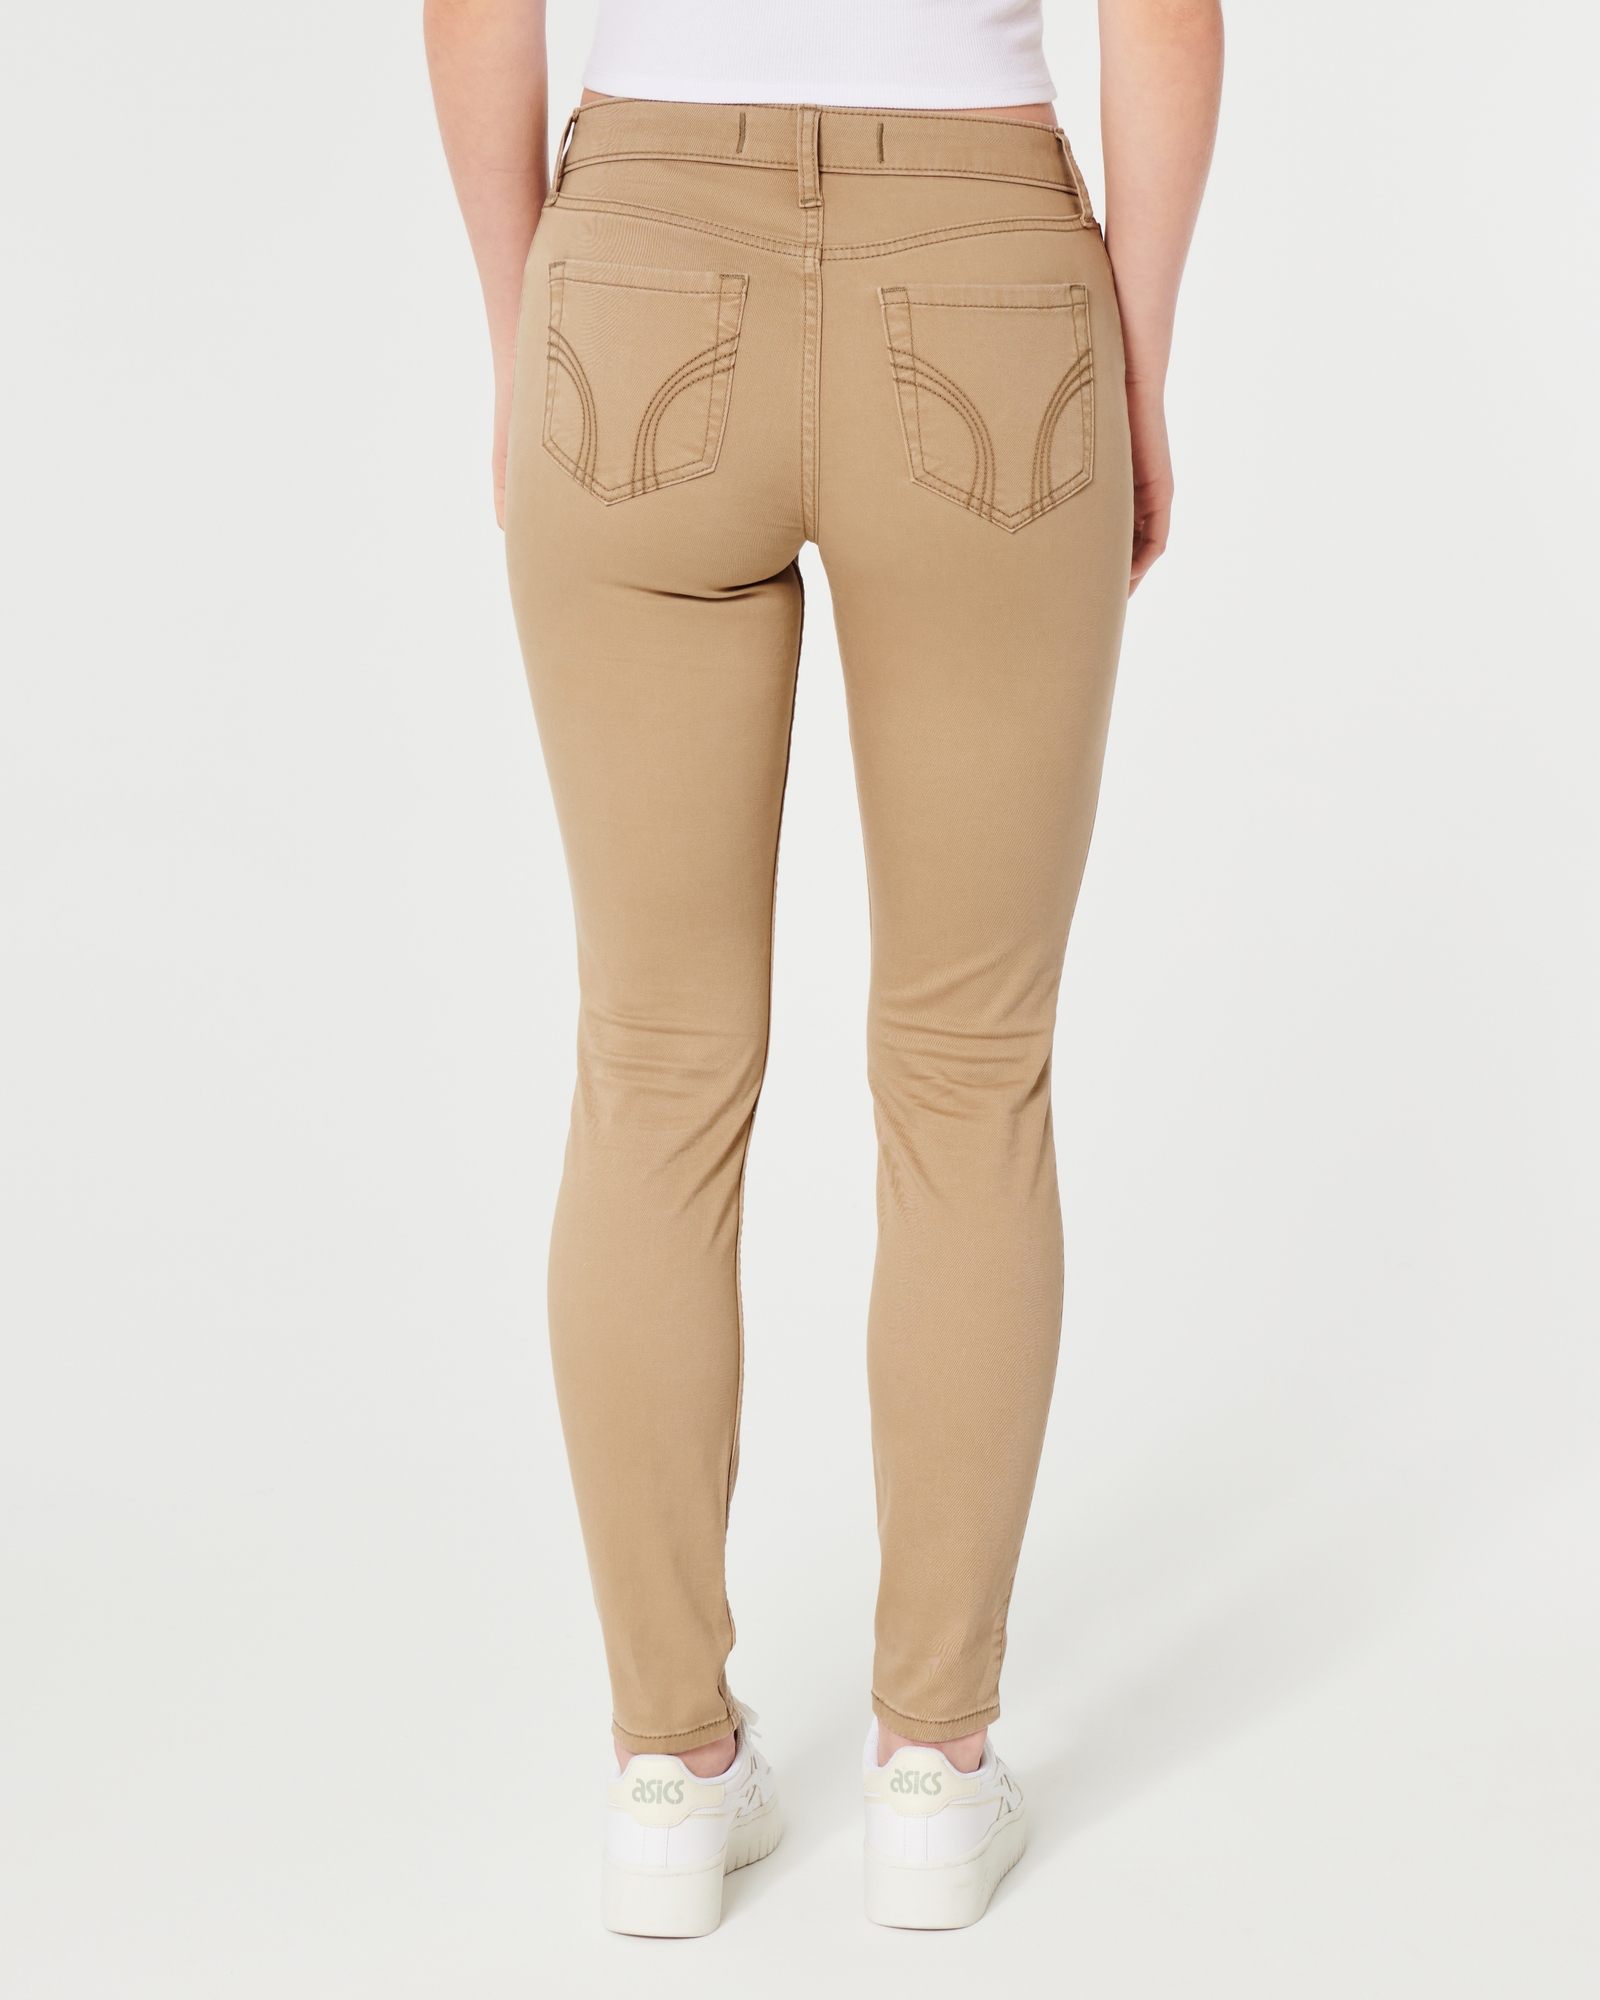 Women's High-Rise Khaki Super Skinny Pants, Women's Bottoms